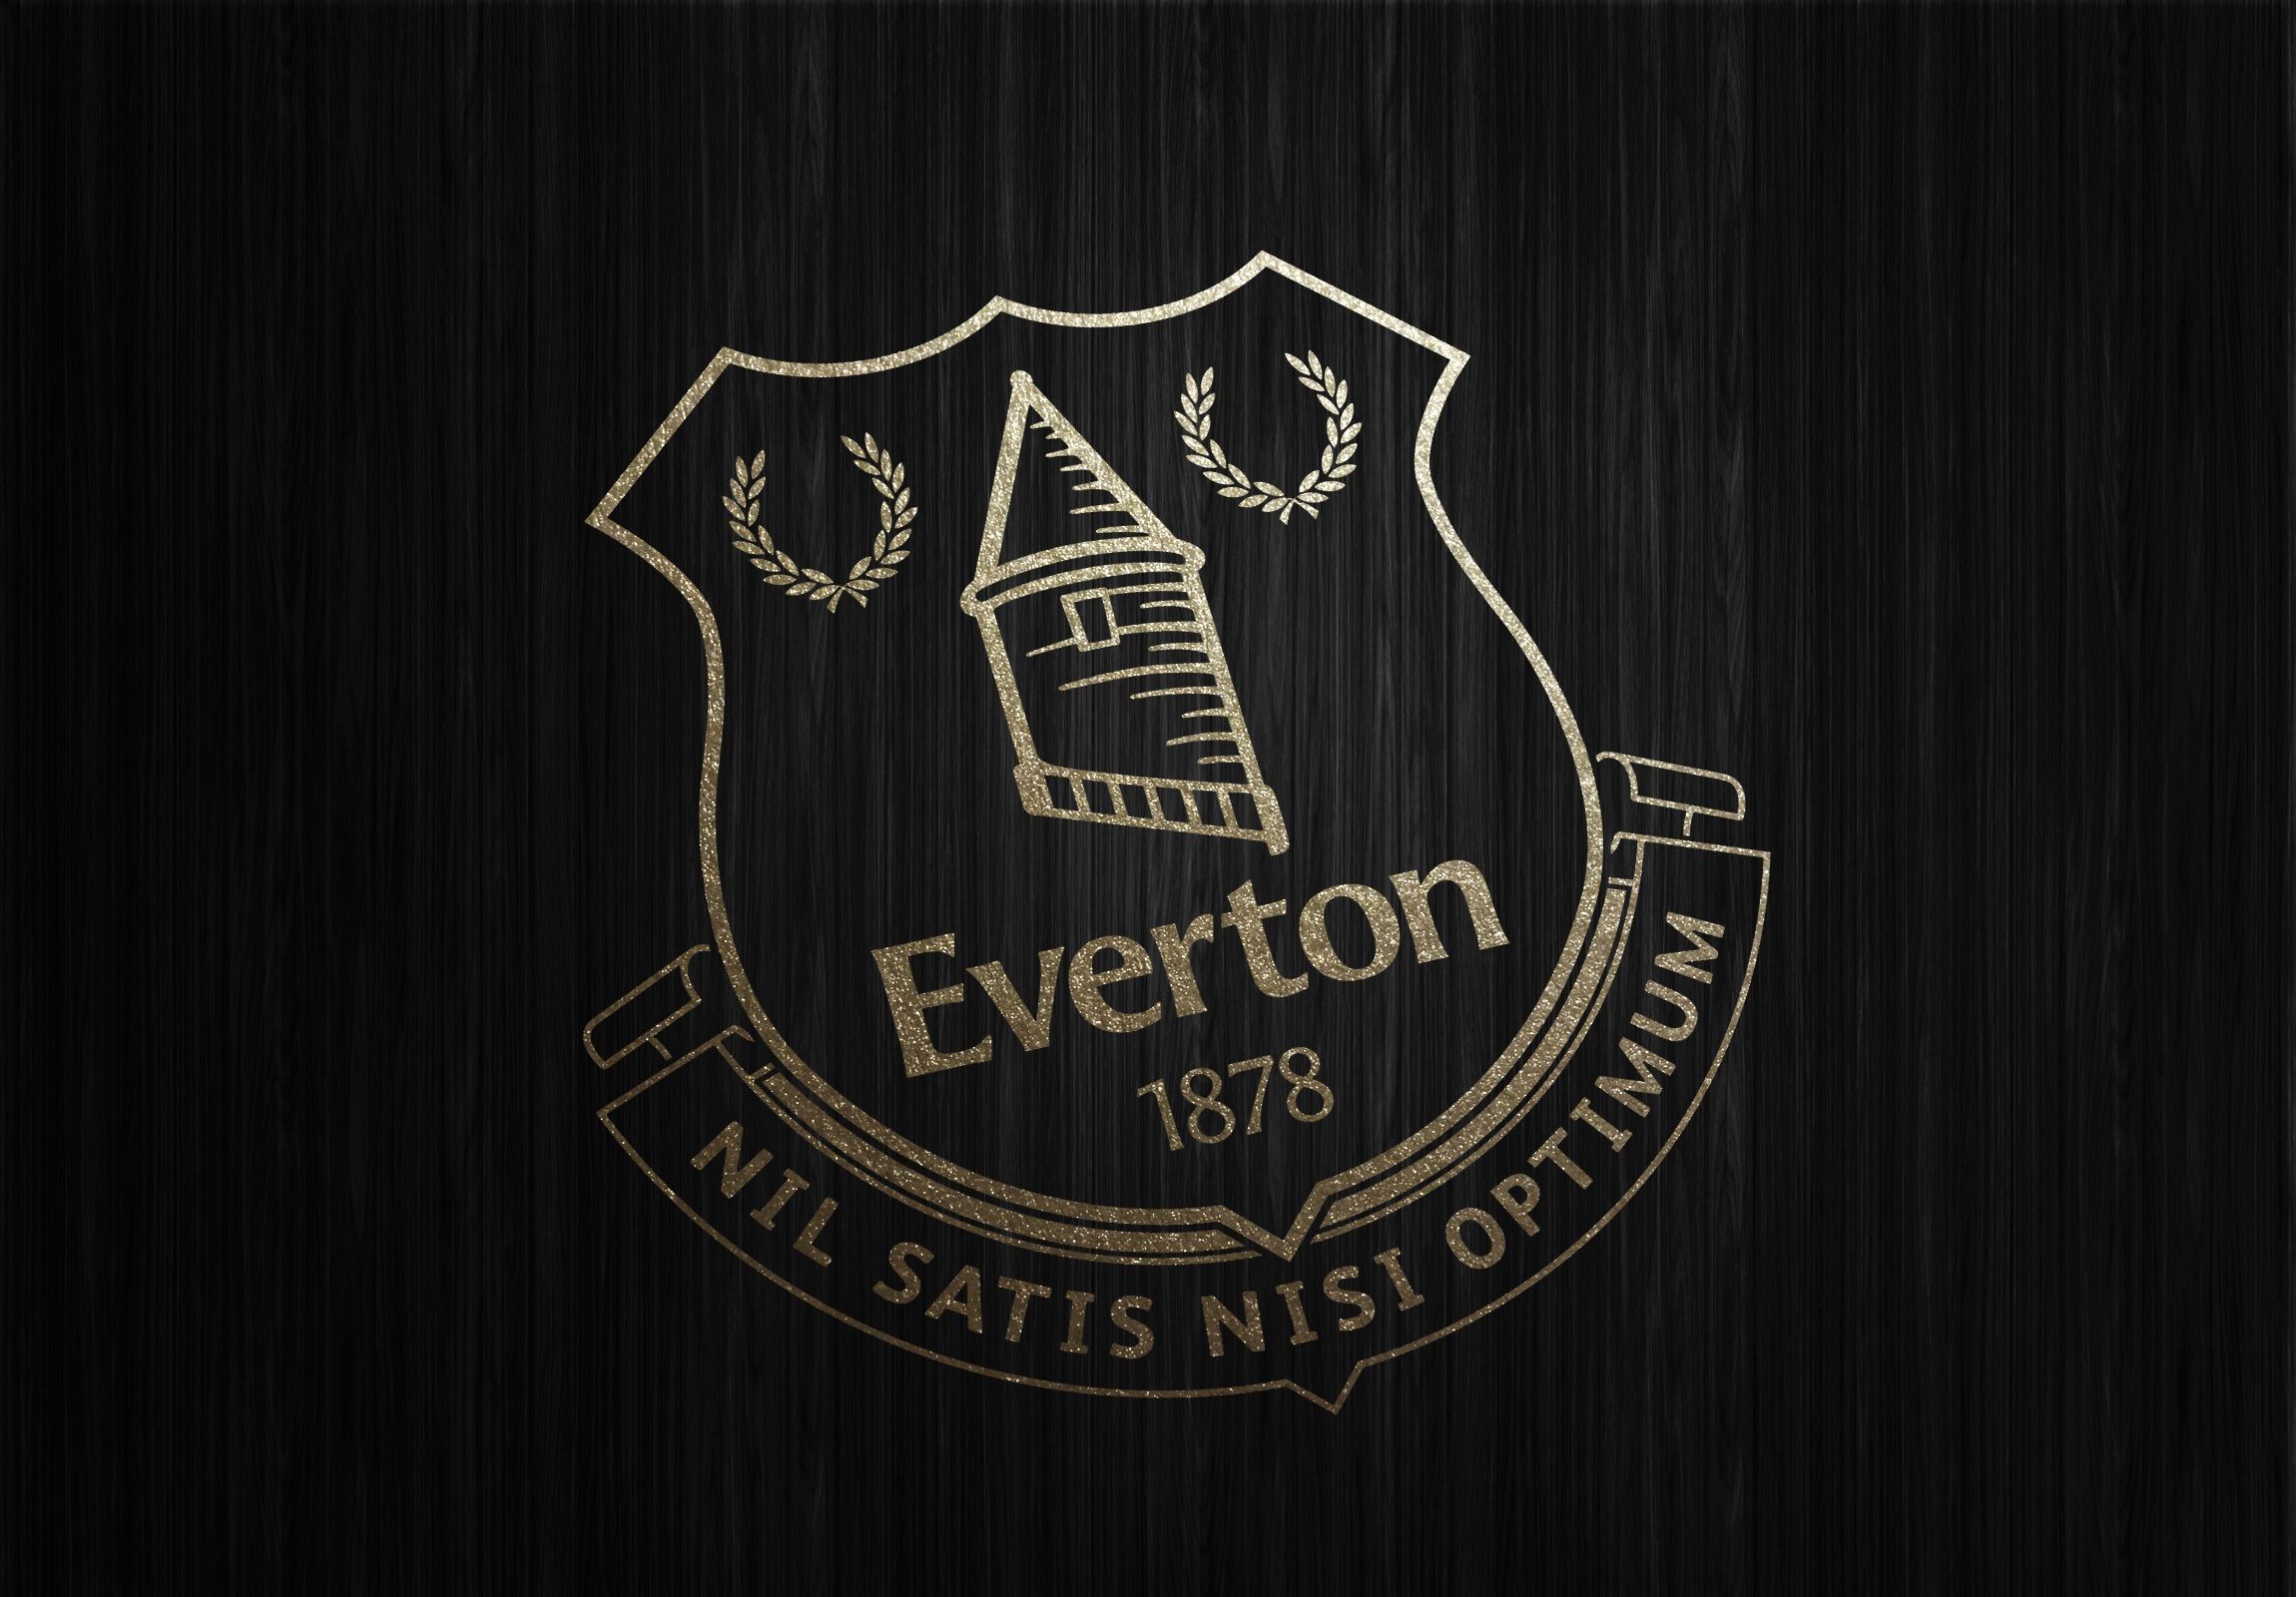 Everton Background Download Free